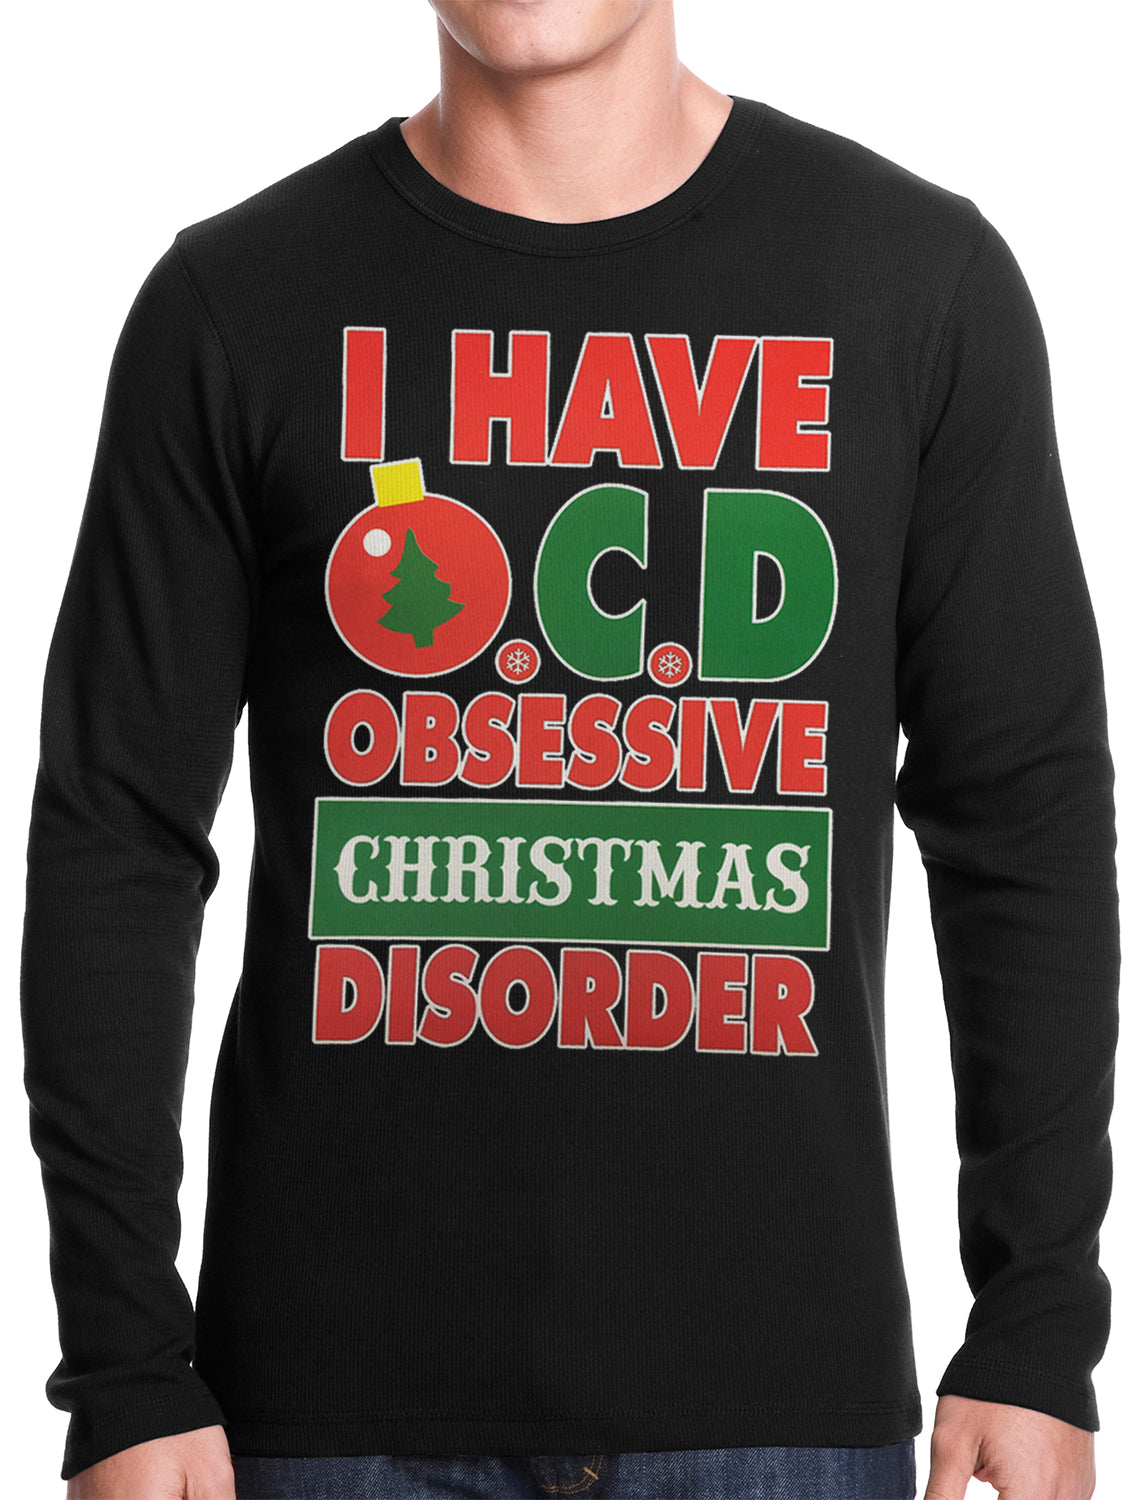 OCD - Obsessive Christmas Disorder Thermal Shirt